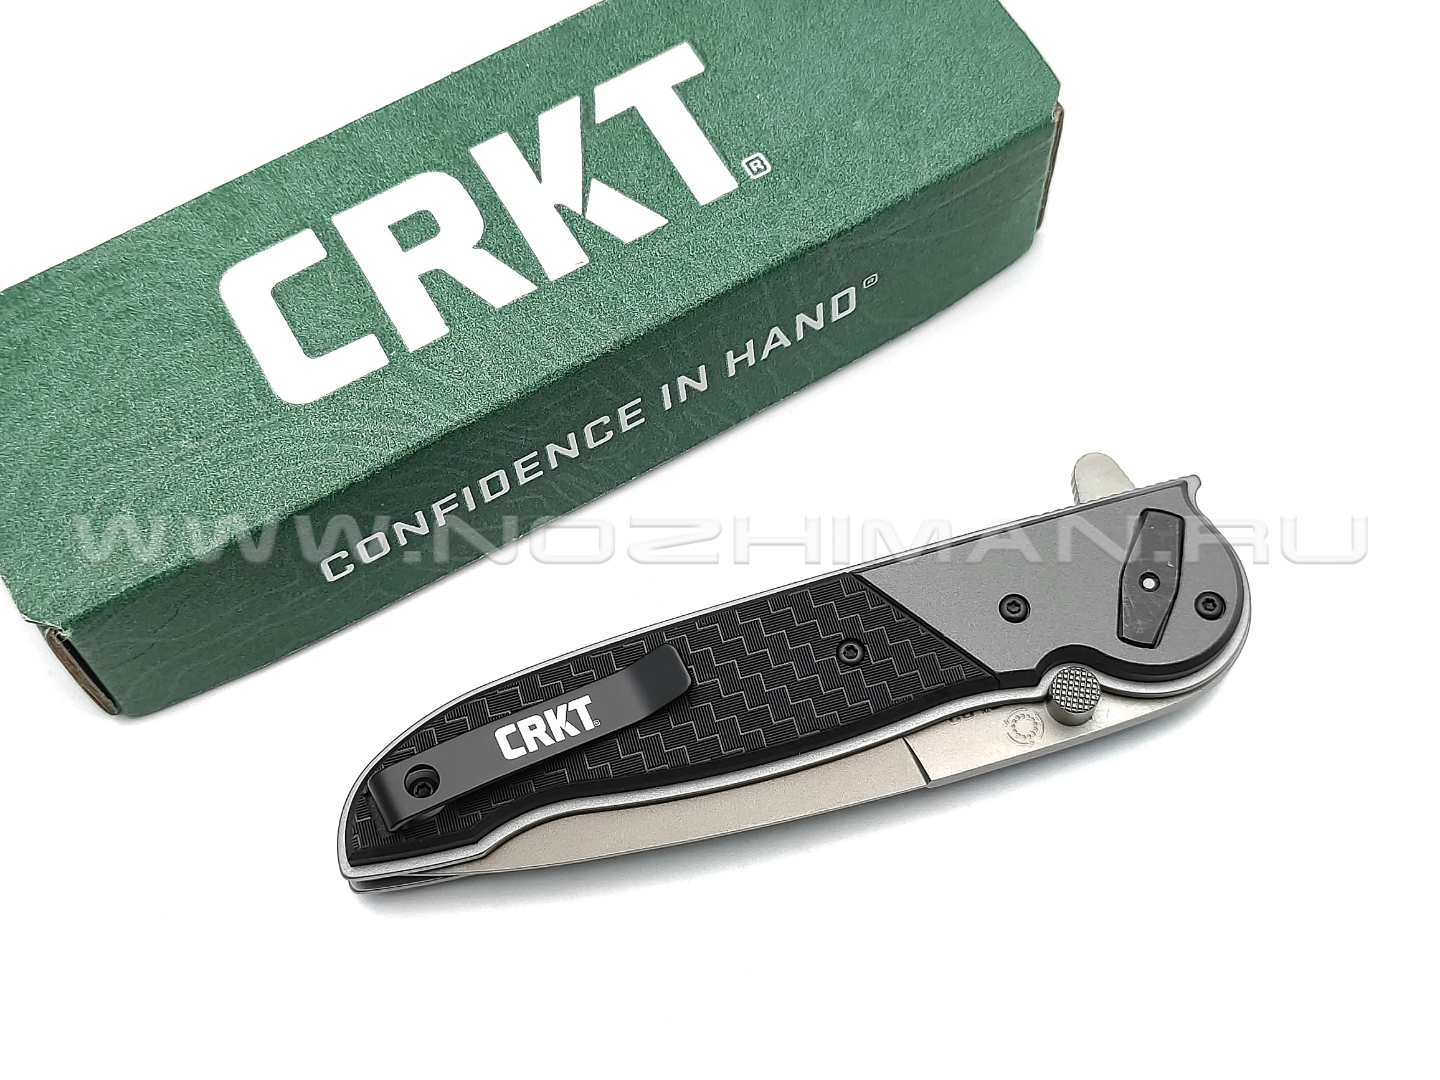 Нож CRKT M40-03 сталь 1.4116, рукоять Glass-Reinforced Nylon, Aluminum